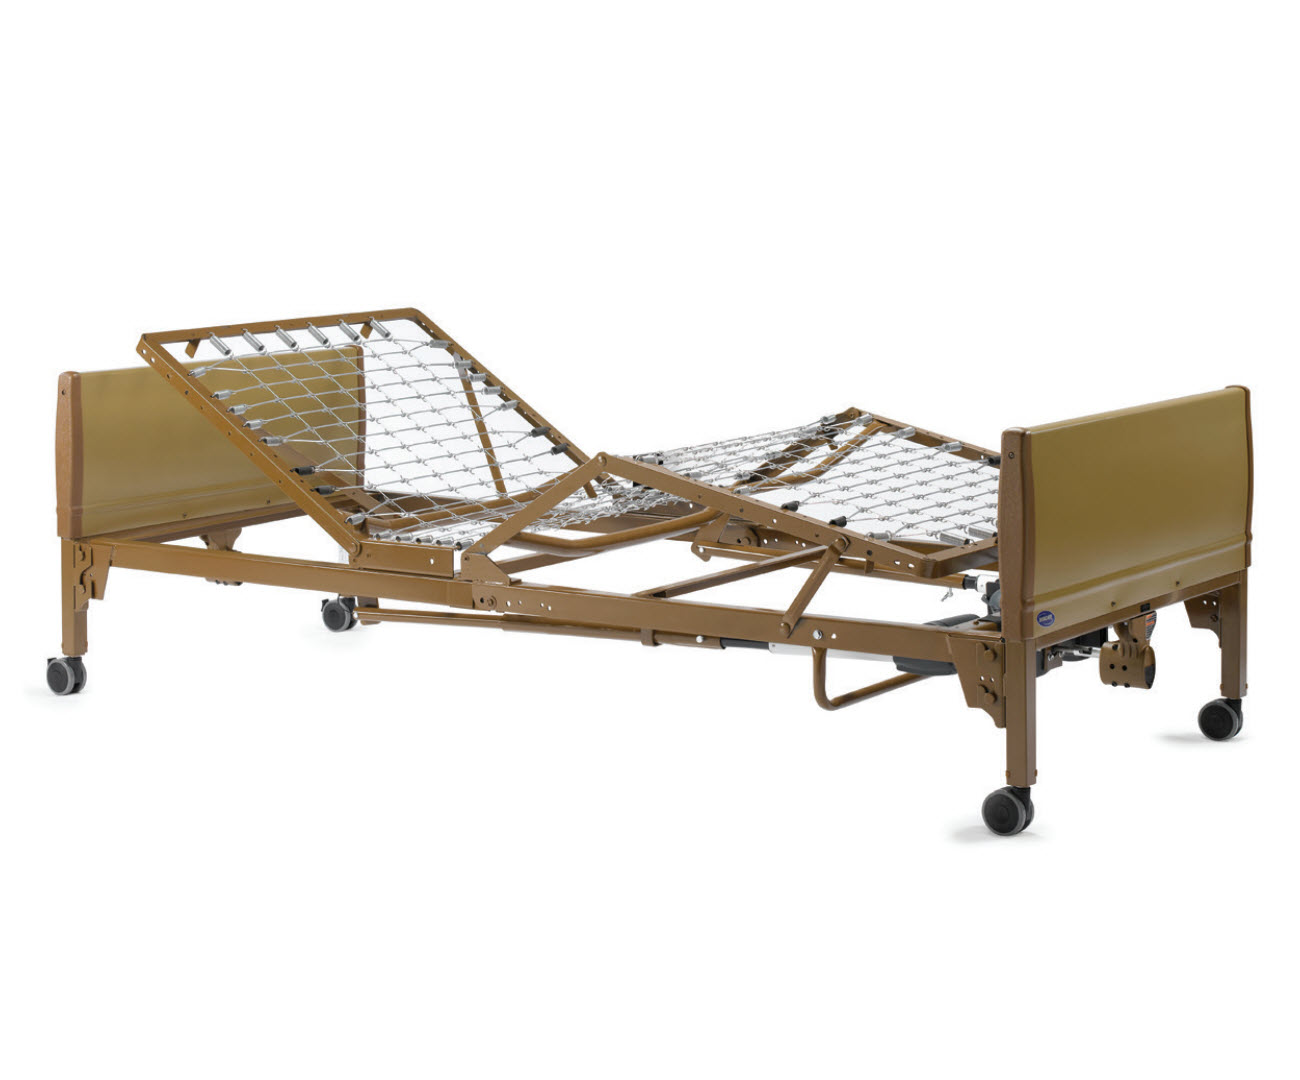 invacare hospital bed mattress size